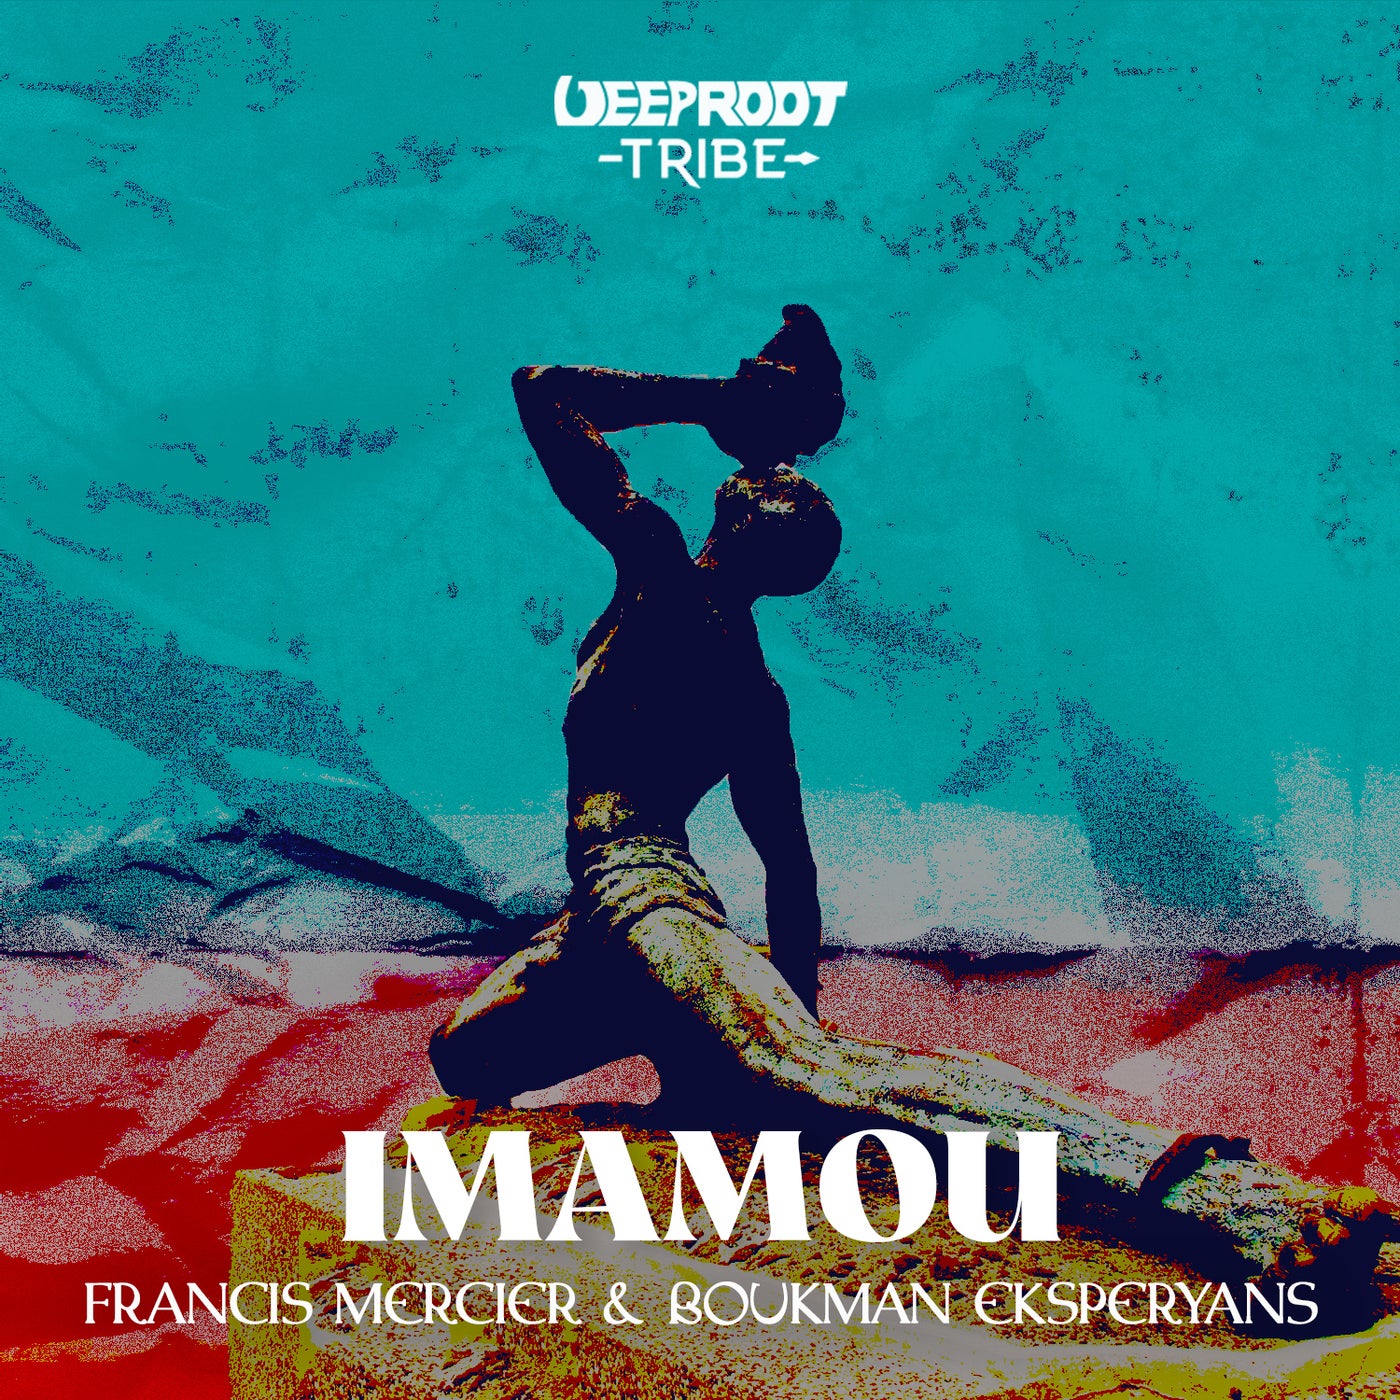 Francis Mercier & Boukman Eksperyans - Imamou - Extended Mix on Deep Root Tribe